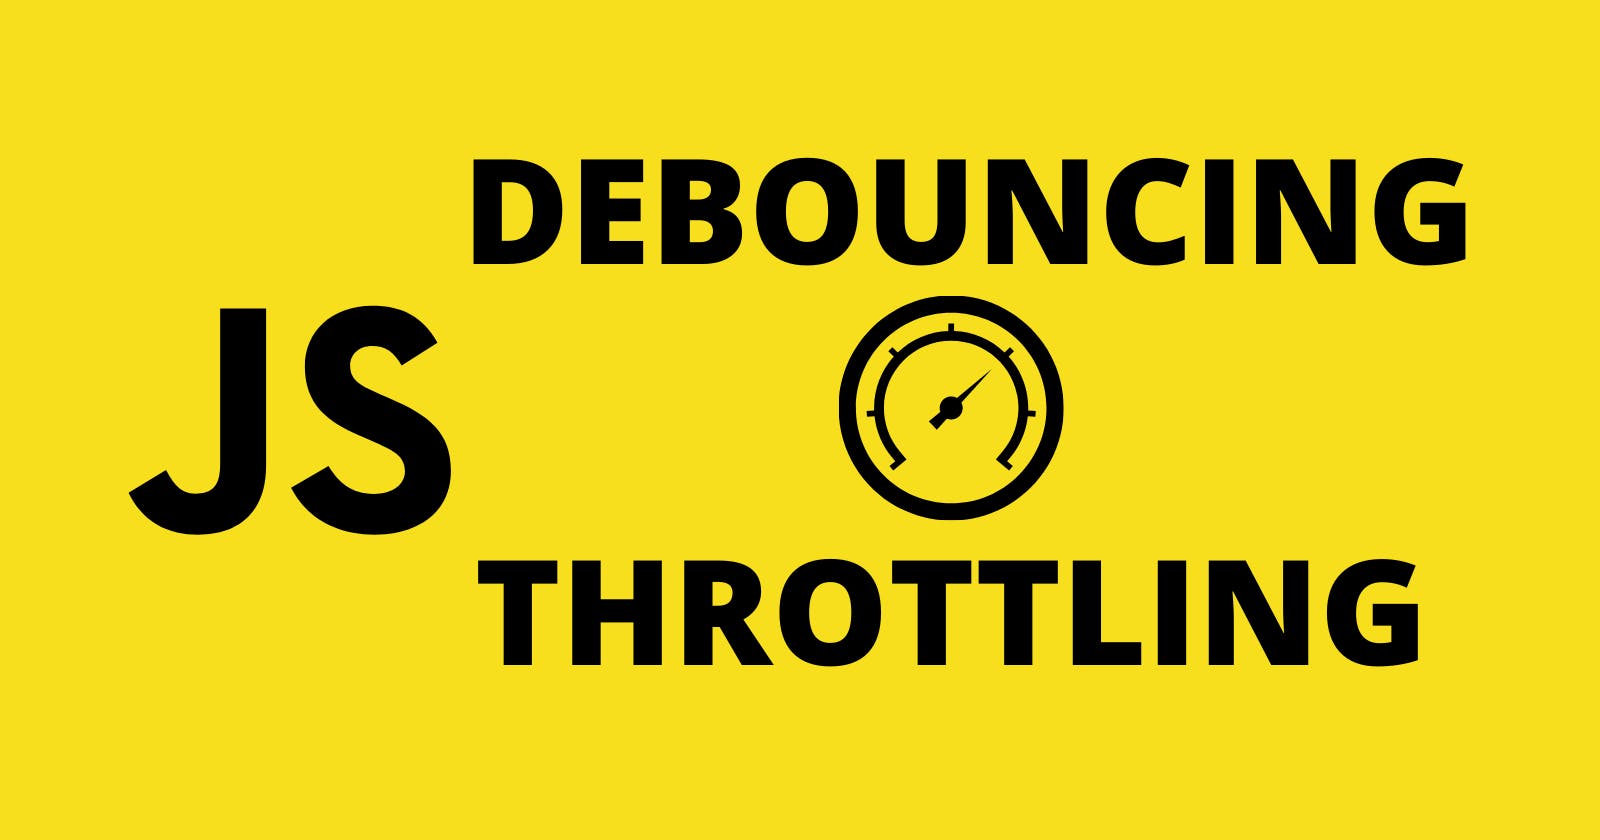 Debouncing and Throttling